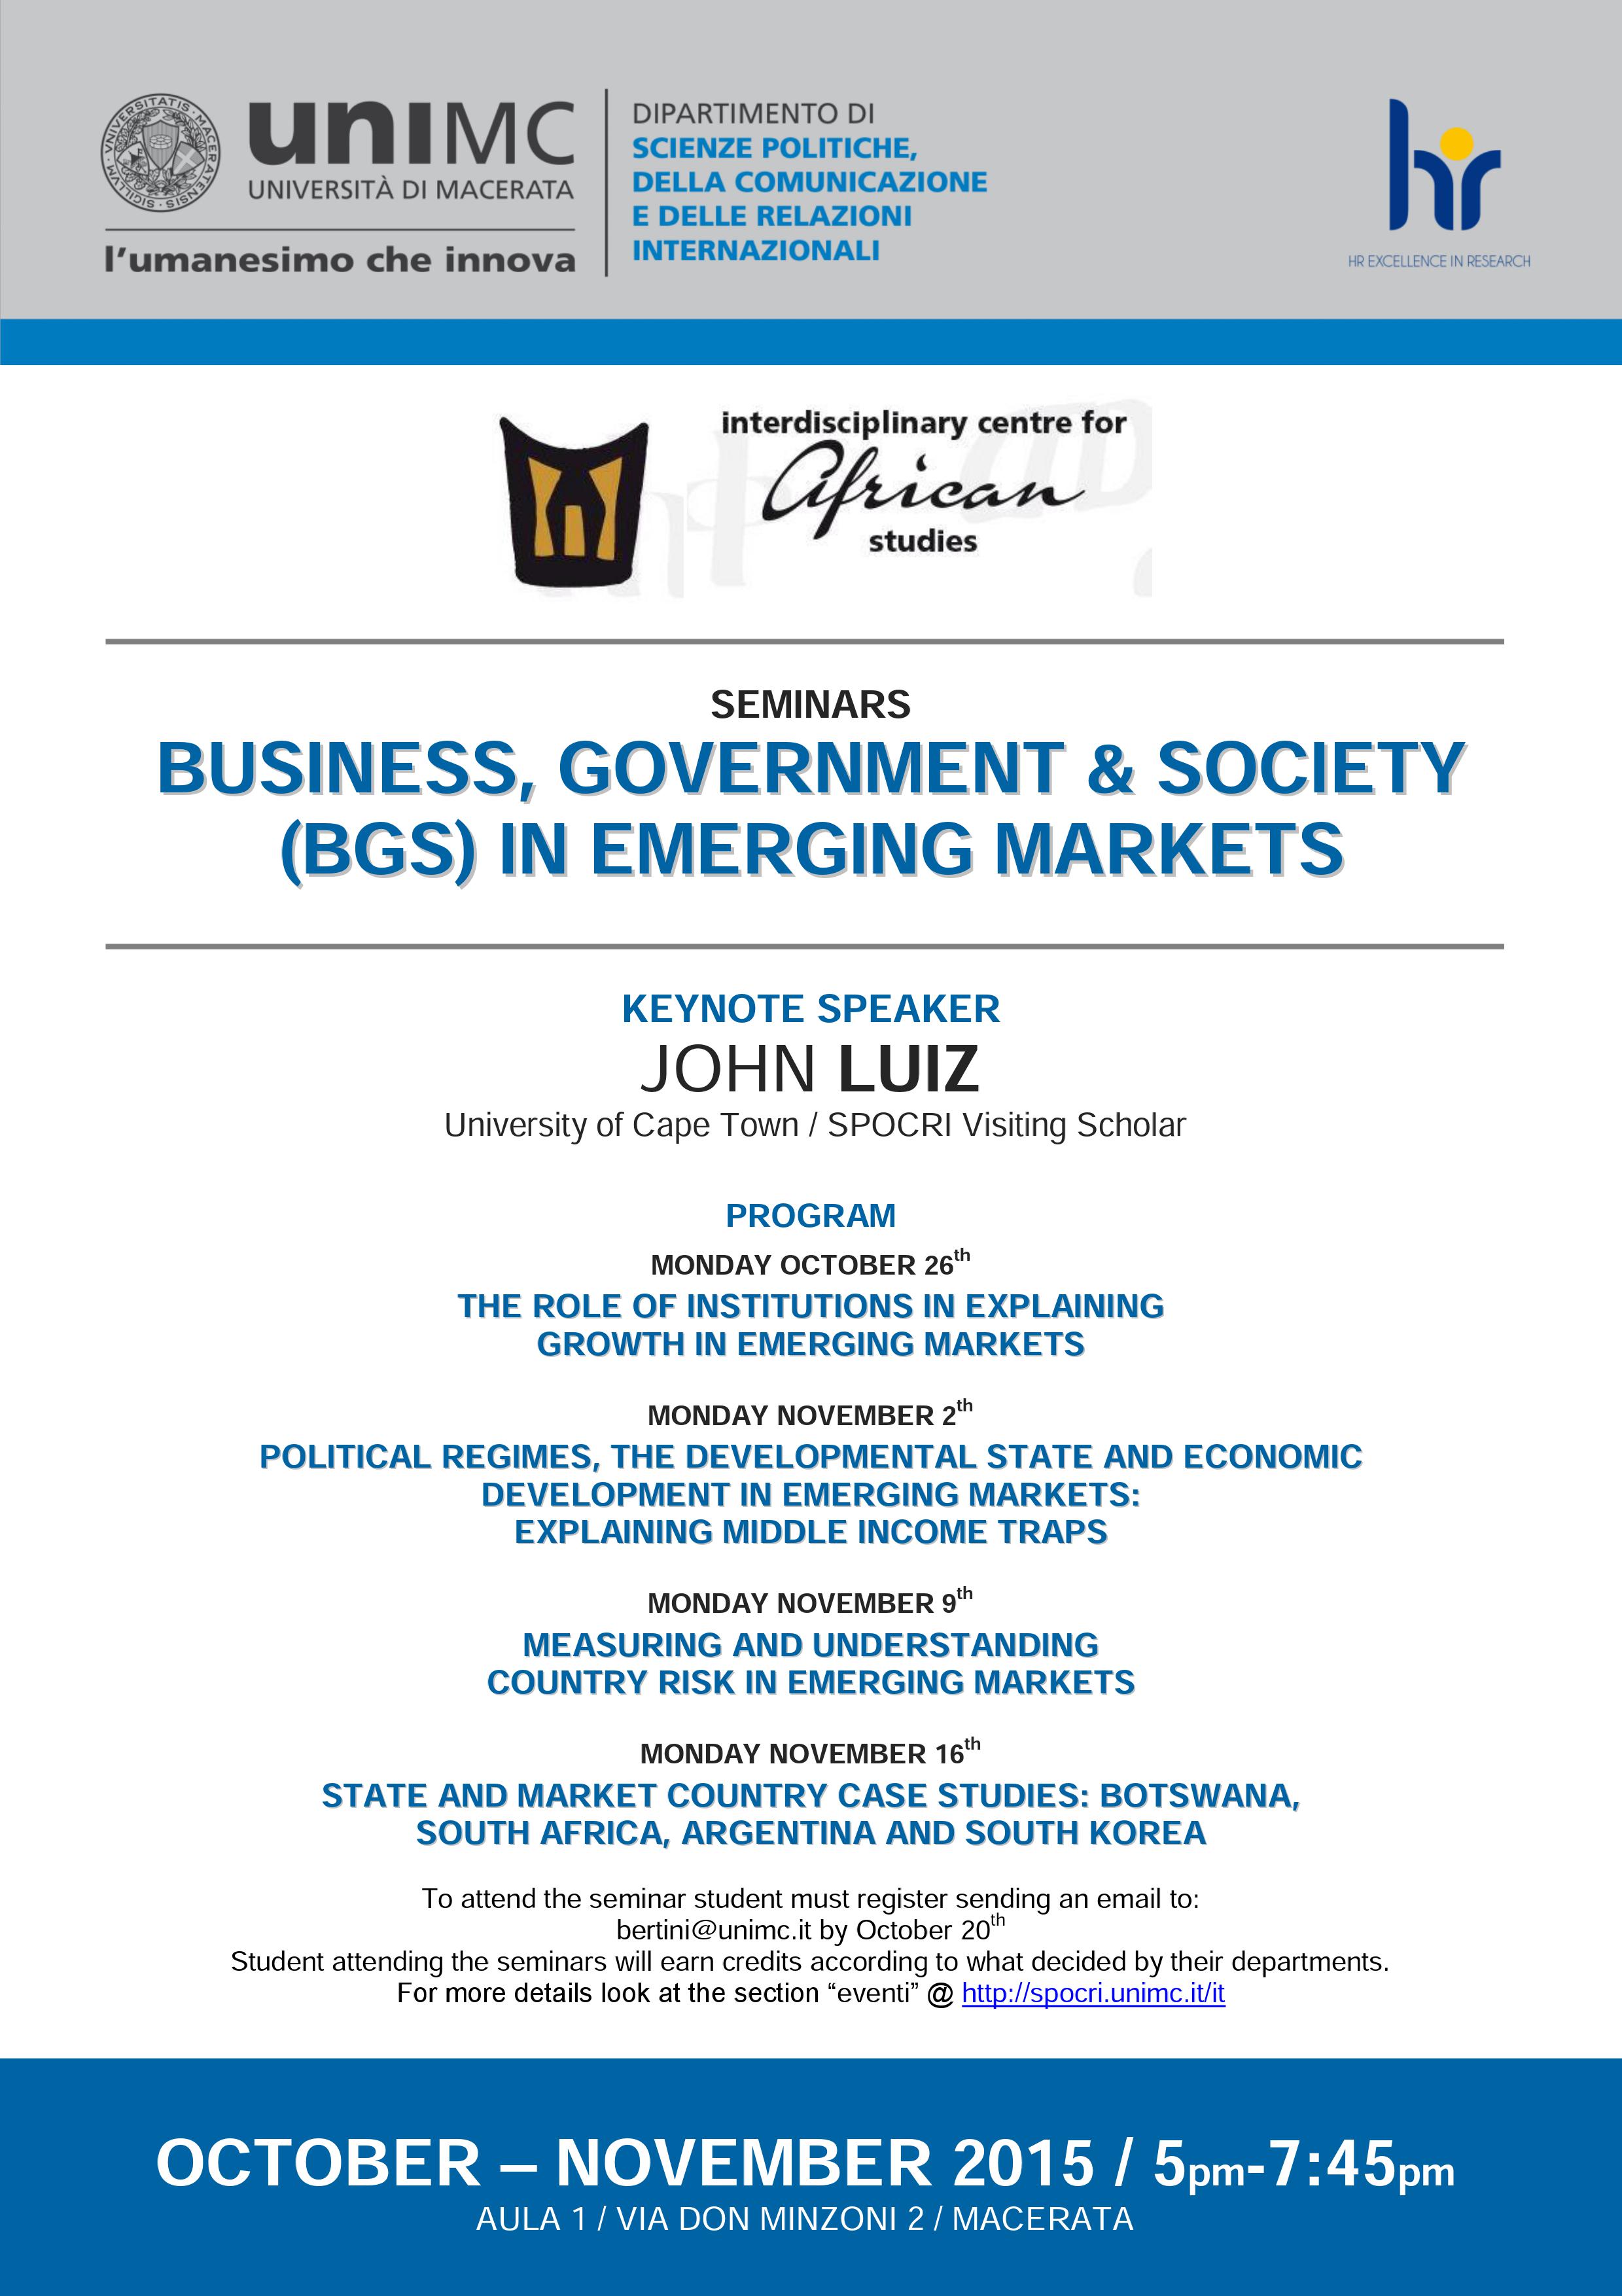 SEMINARS. Business, Government & Society (BSG) in emerging markets